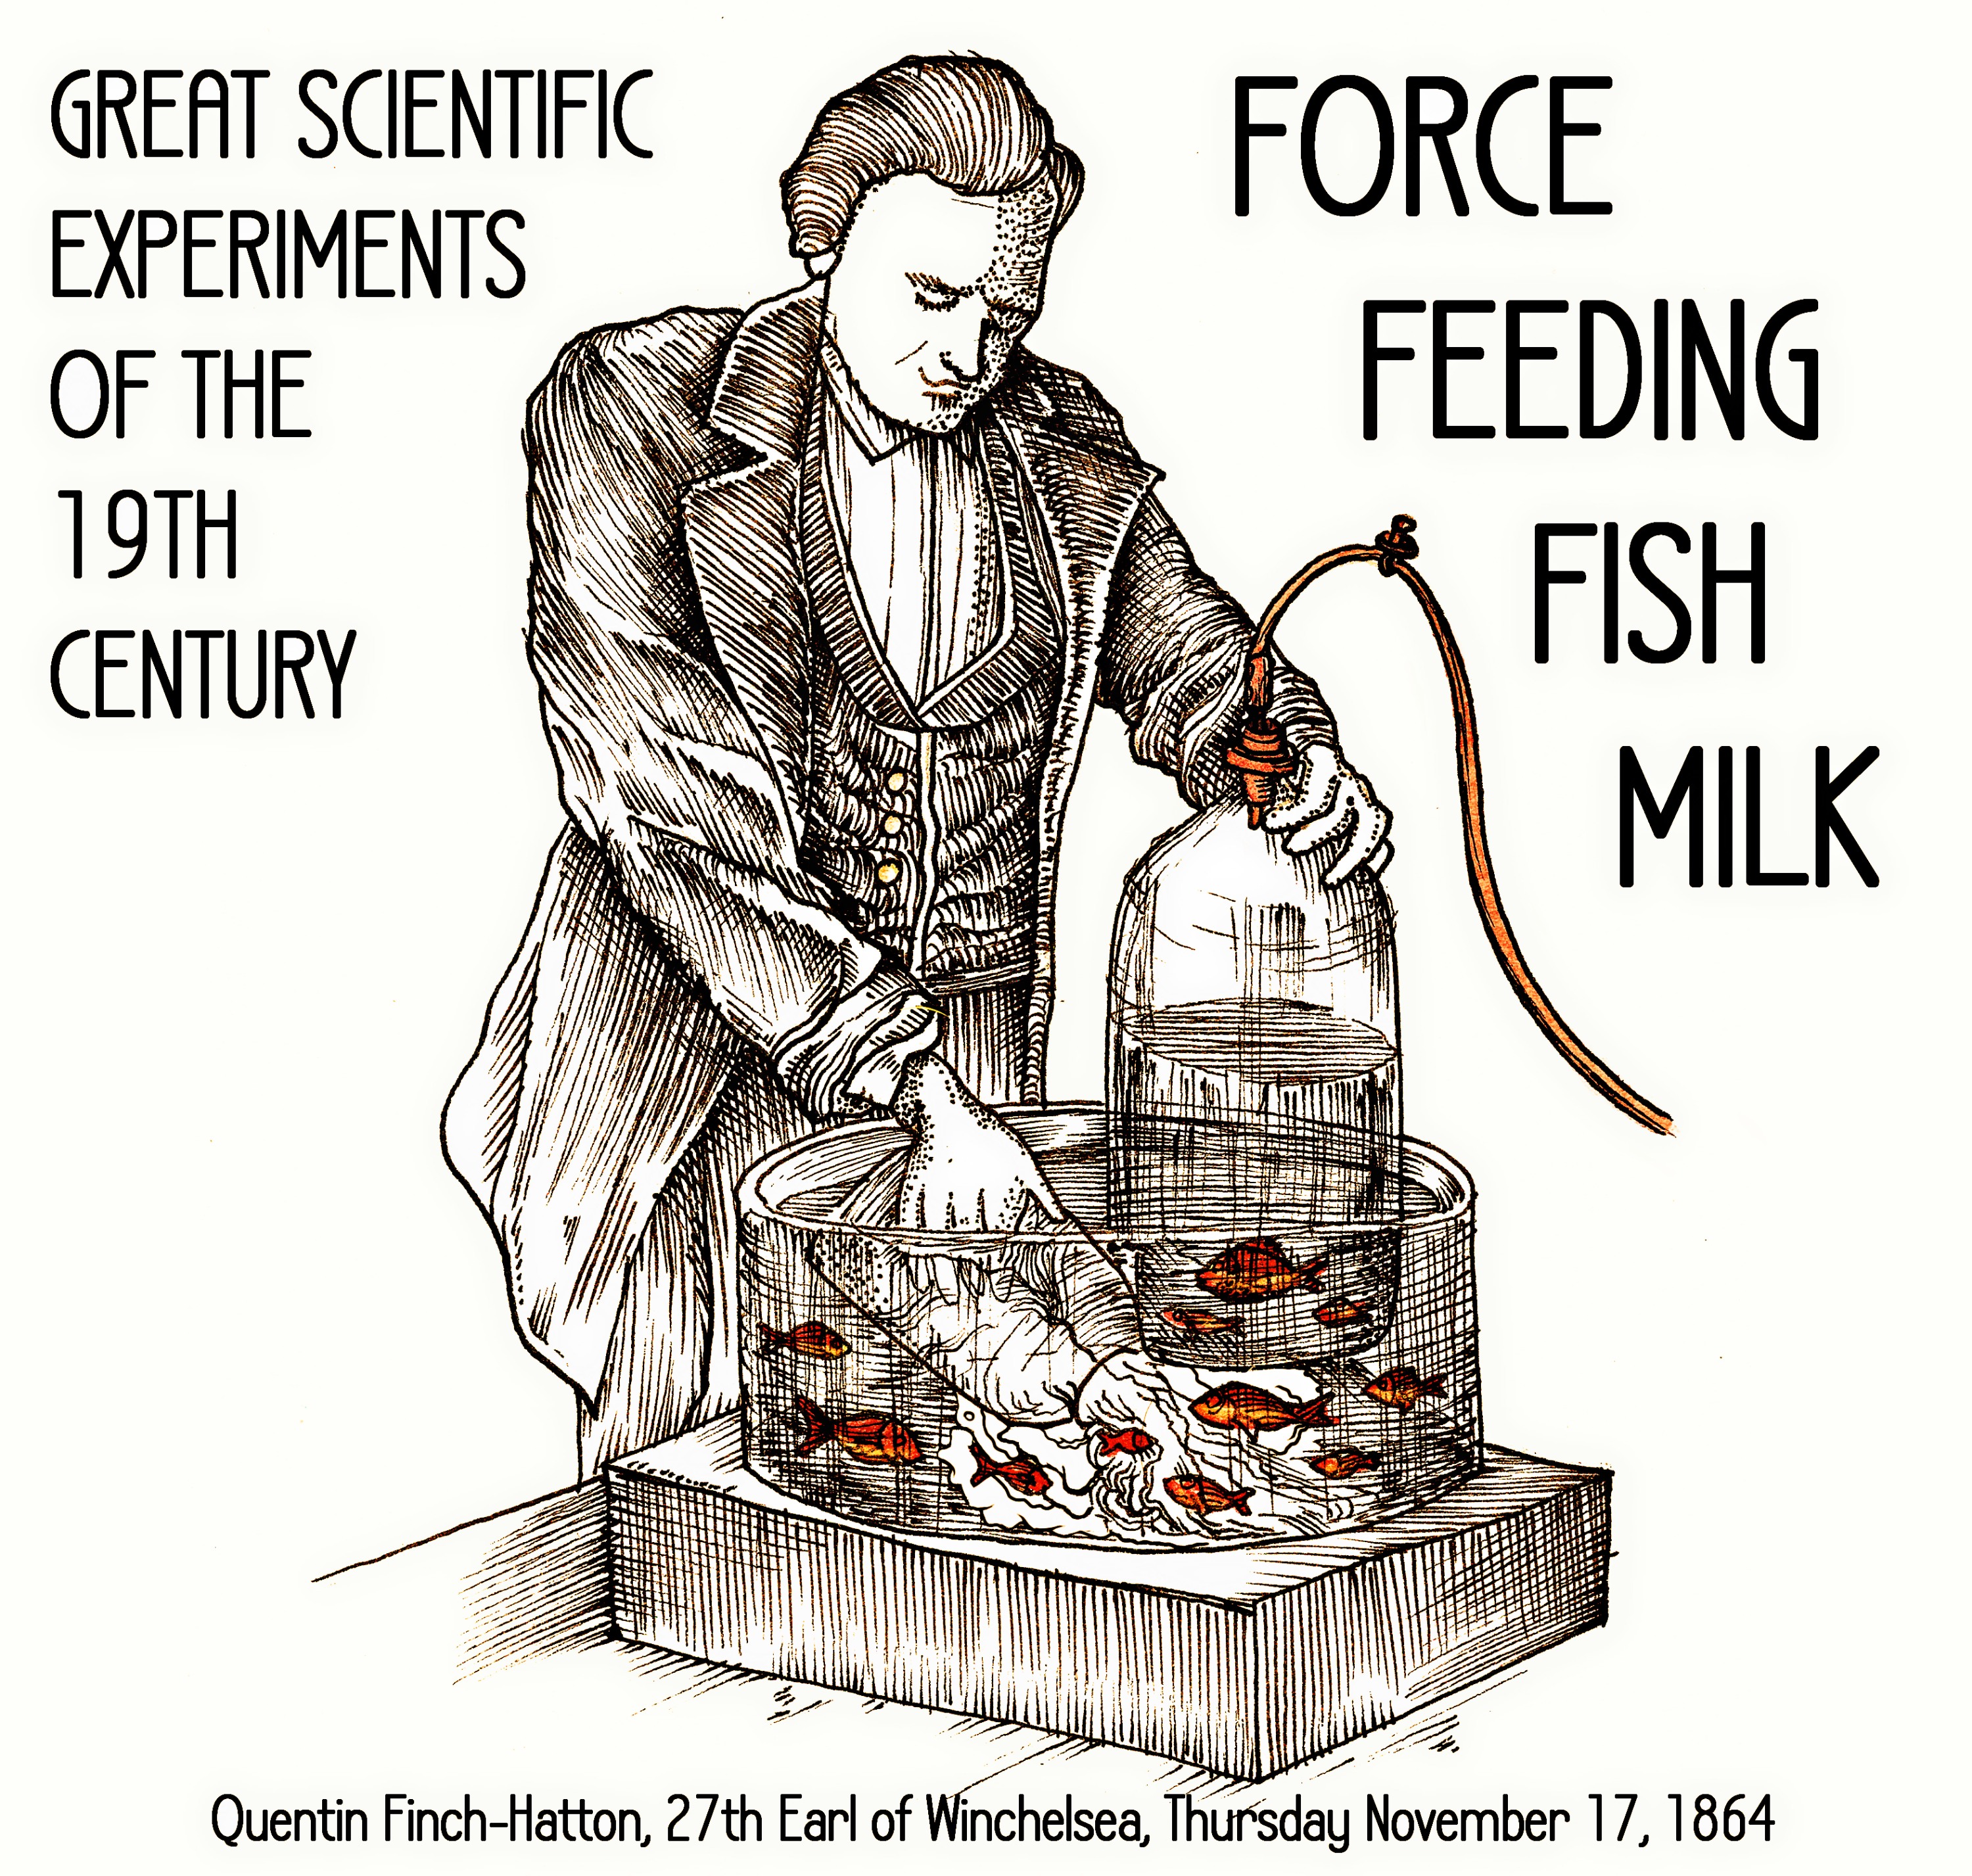 Force Feeding Fish Milk poster